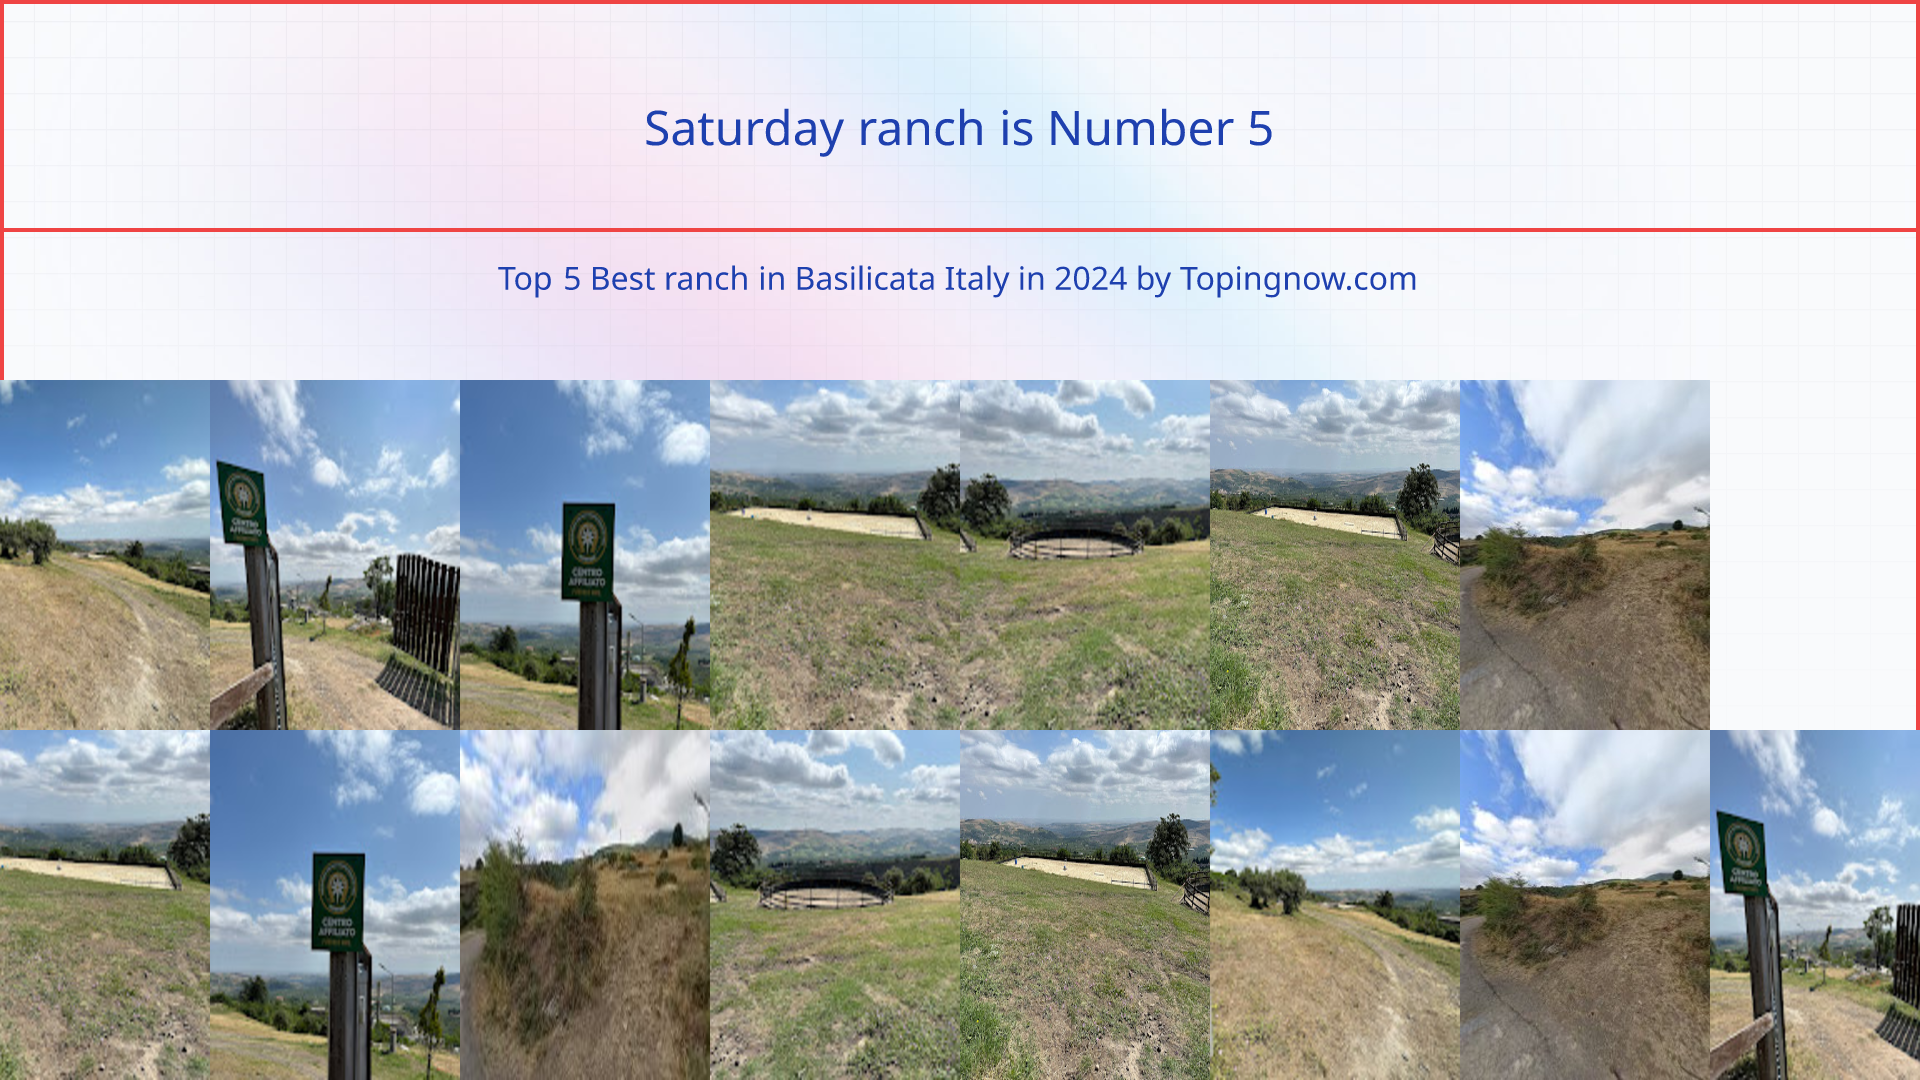 Saturday ranch: Top 5 Best ranch in Basilicata Italy in 2024